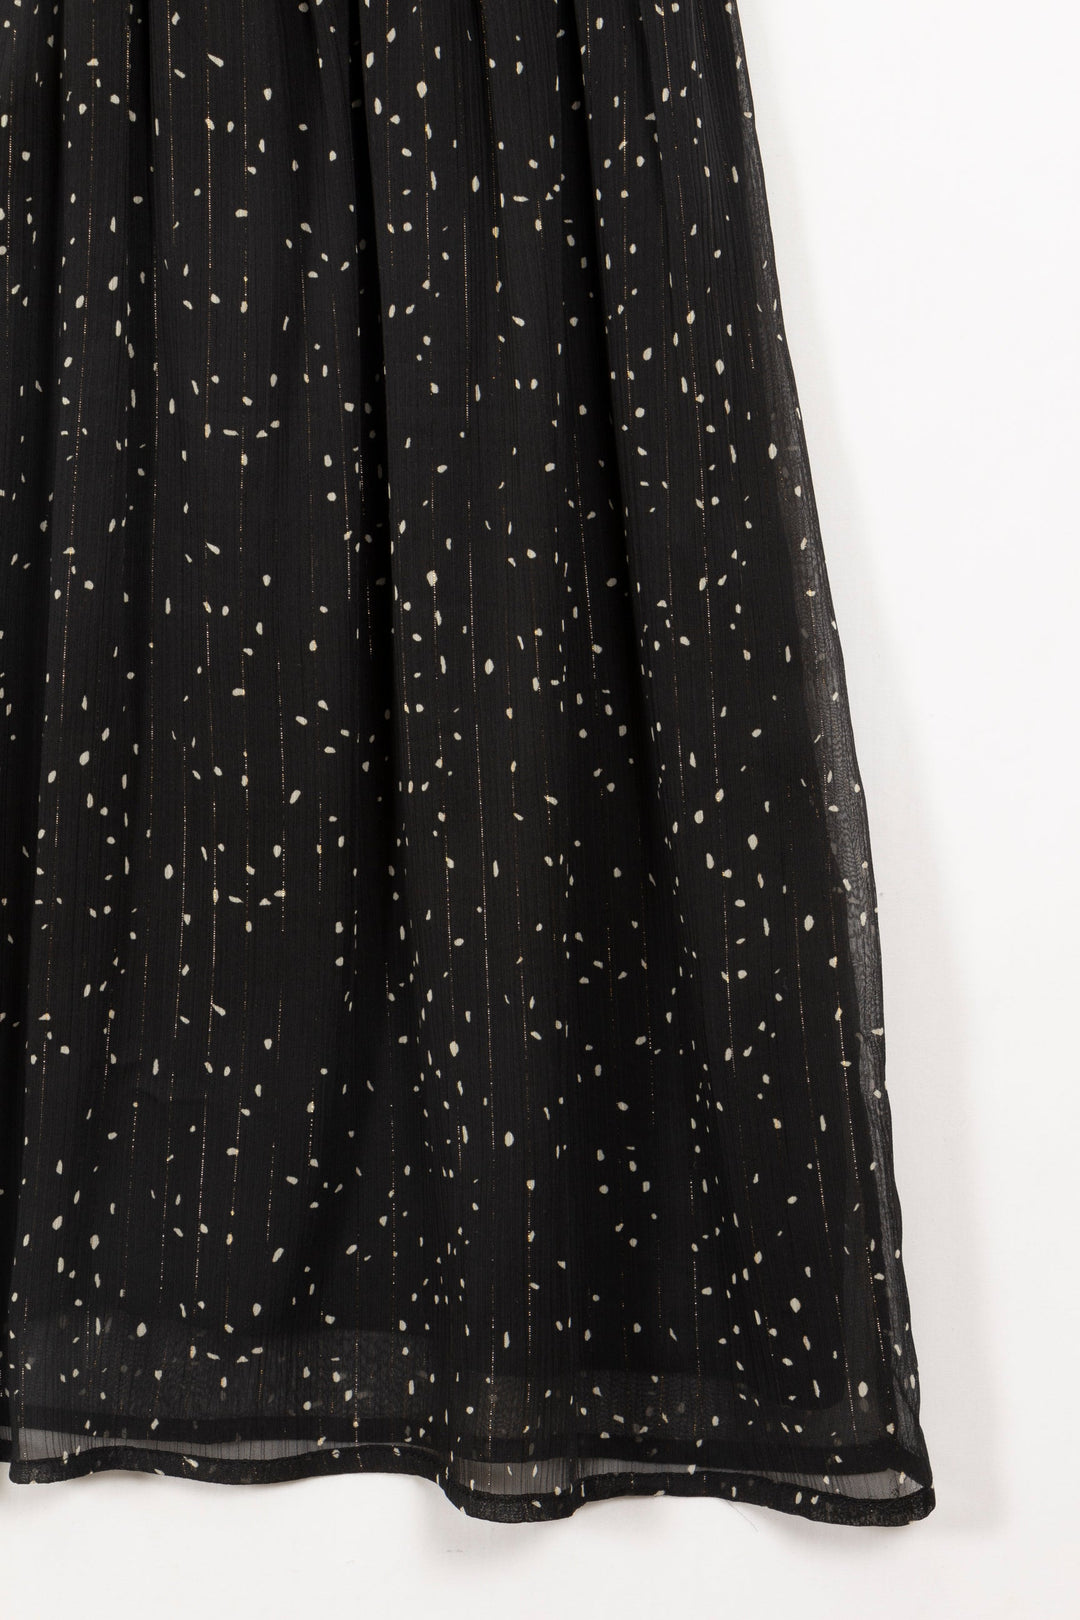 Black midi dress with white polka dots - 42